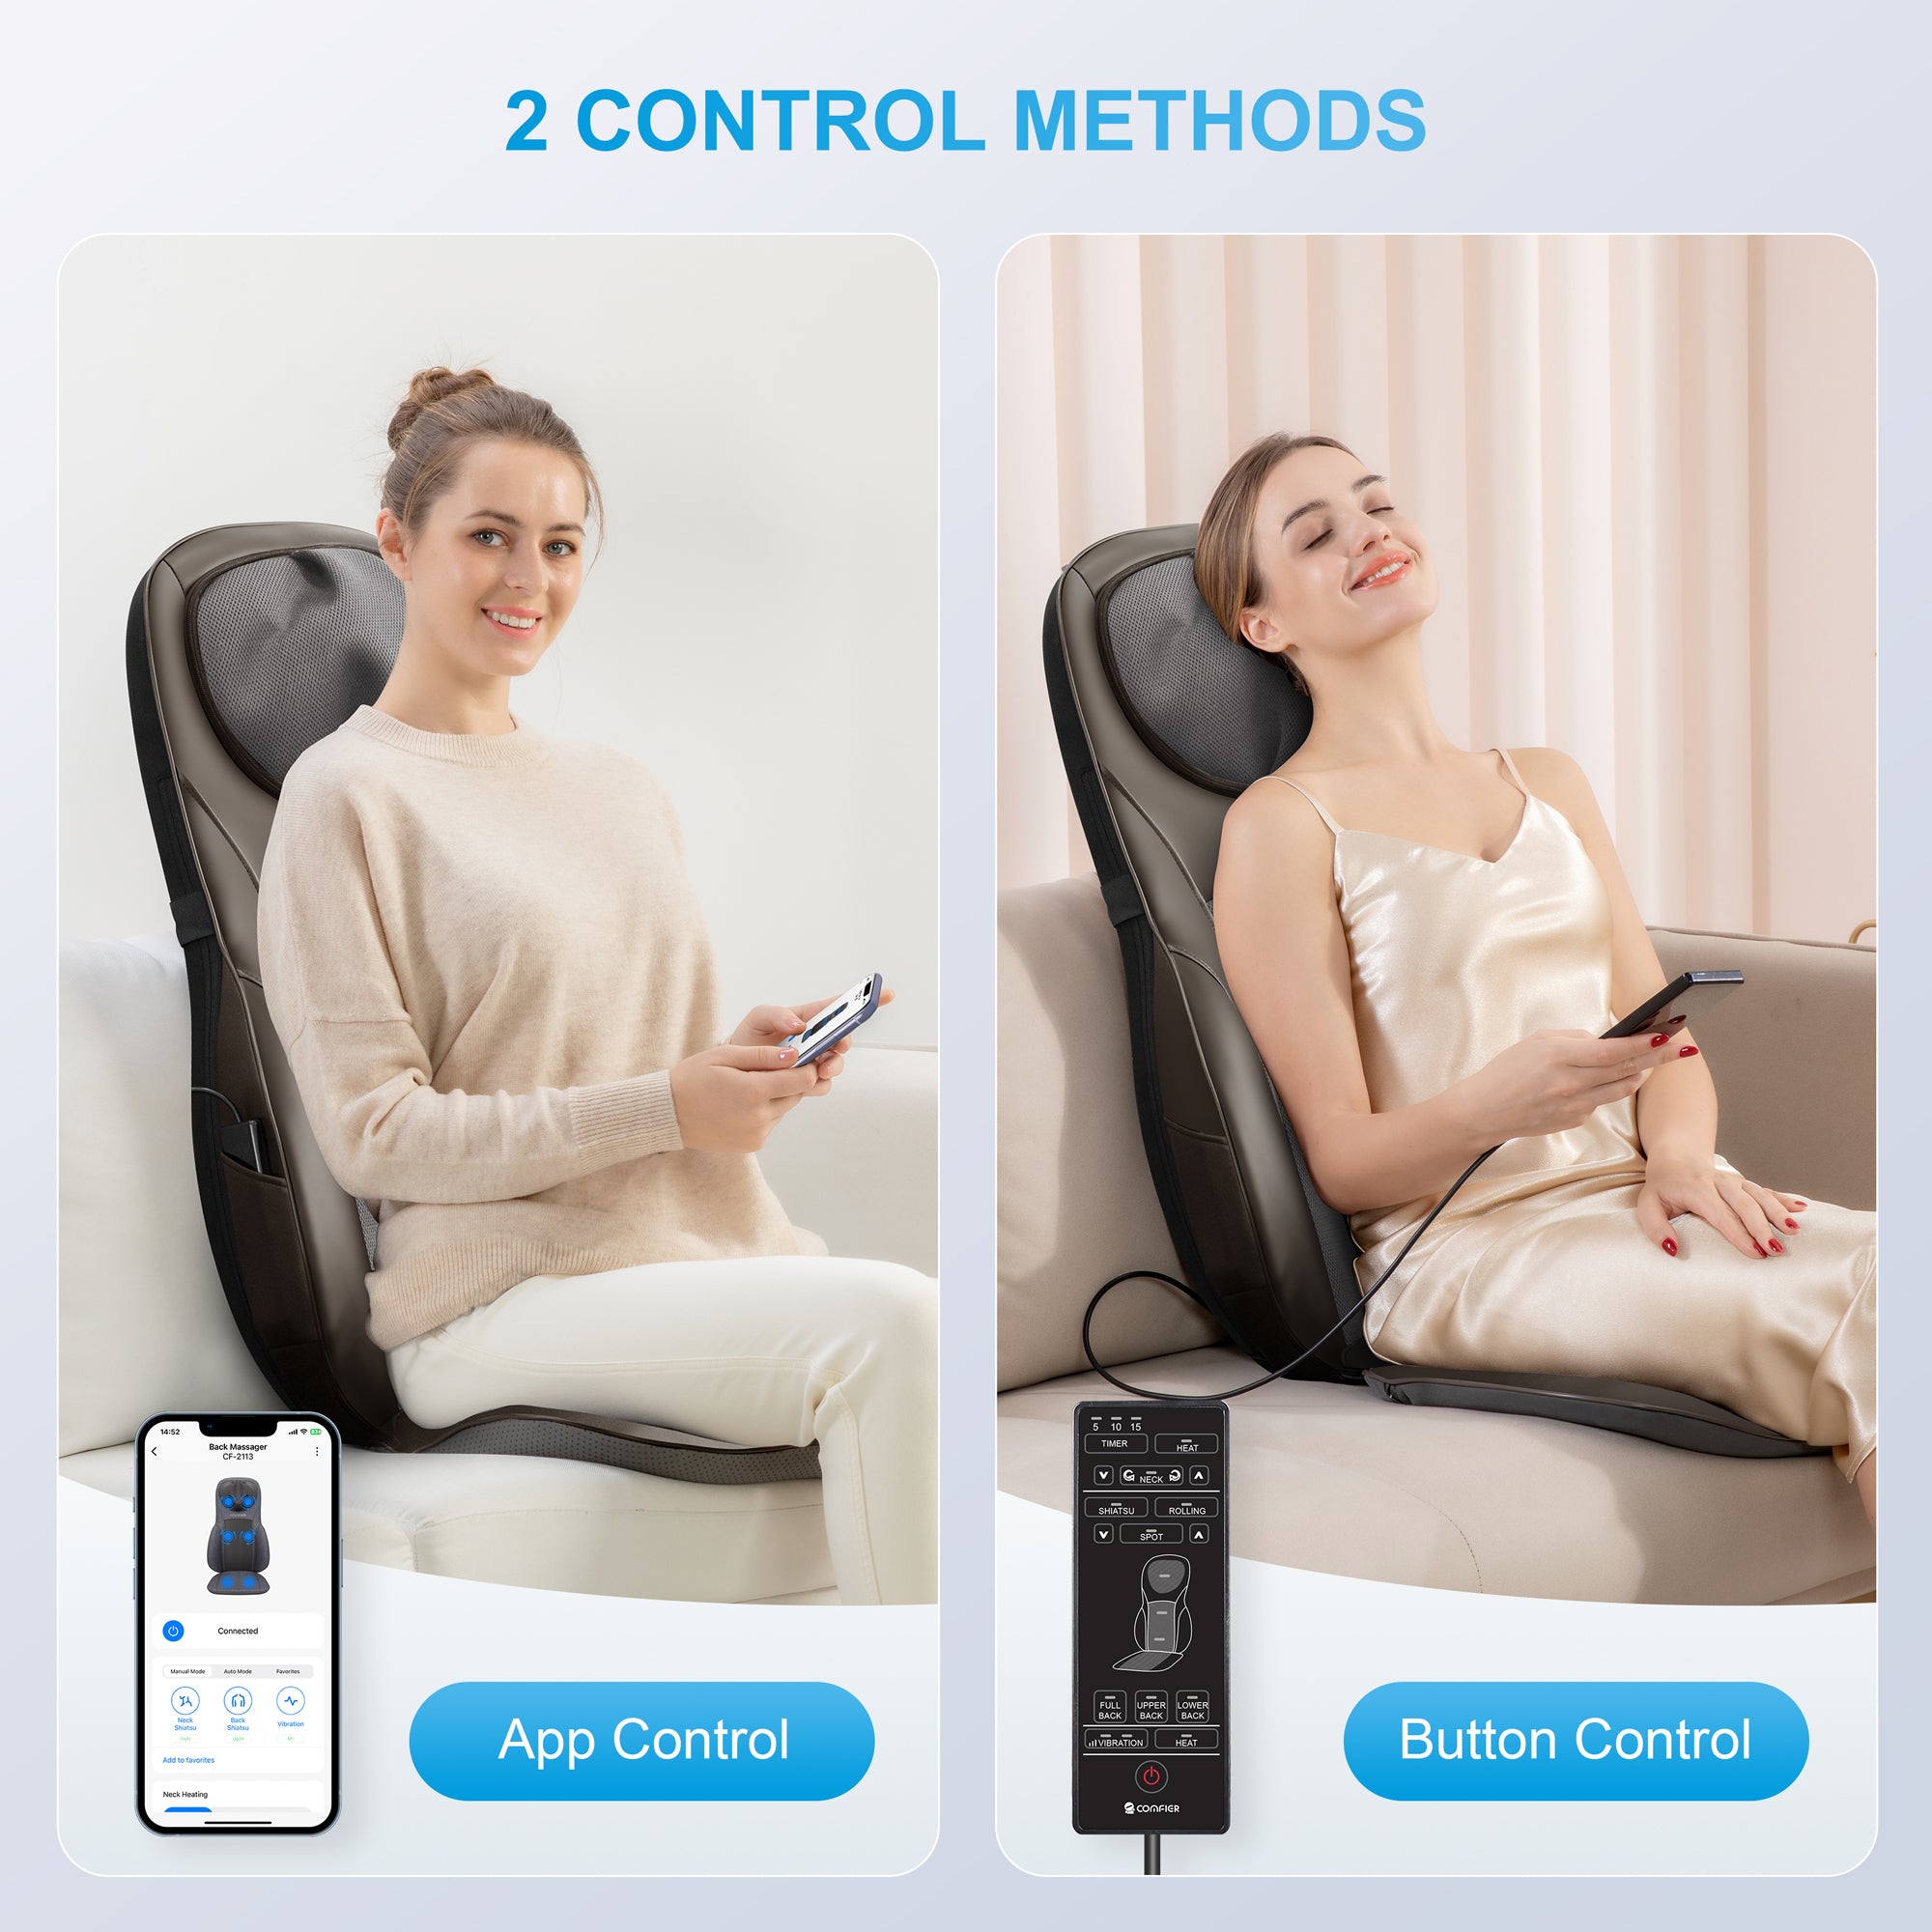 Comfier Shiatsu Neck Back Massager, Smart App Control Massage